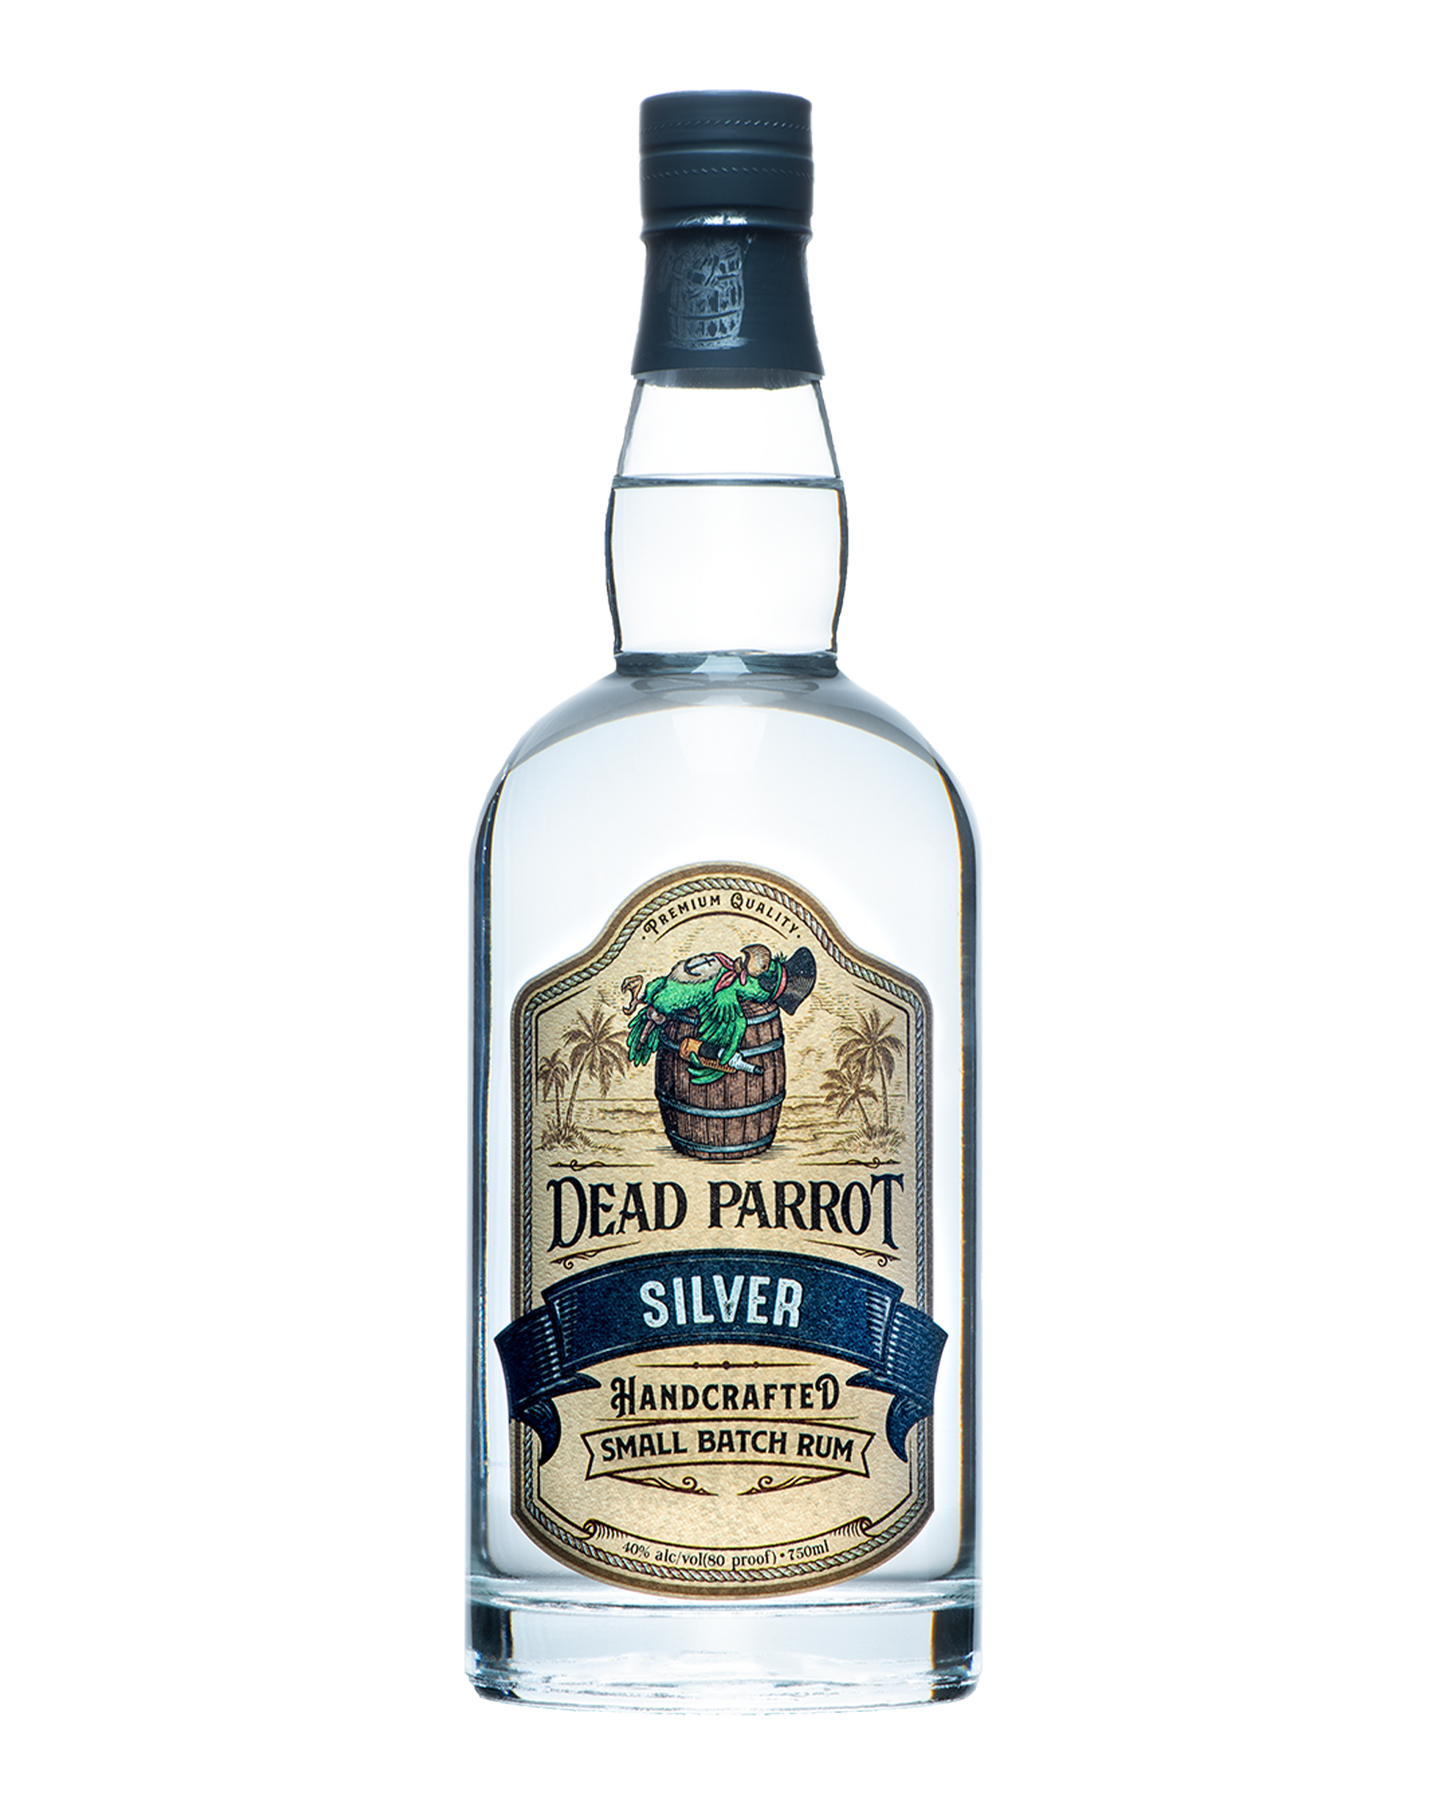 Dead Parrot Silver Rum bottle